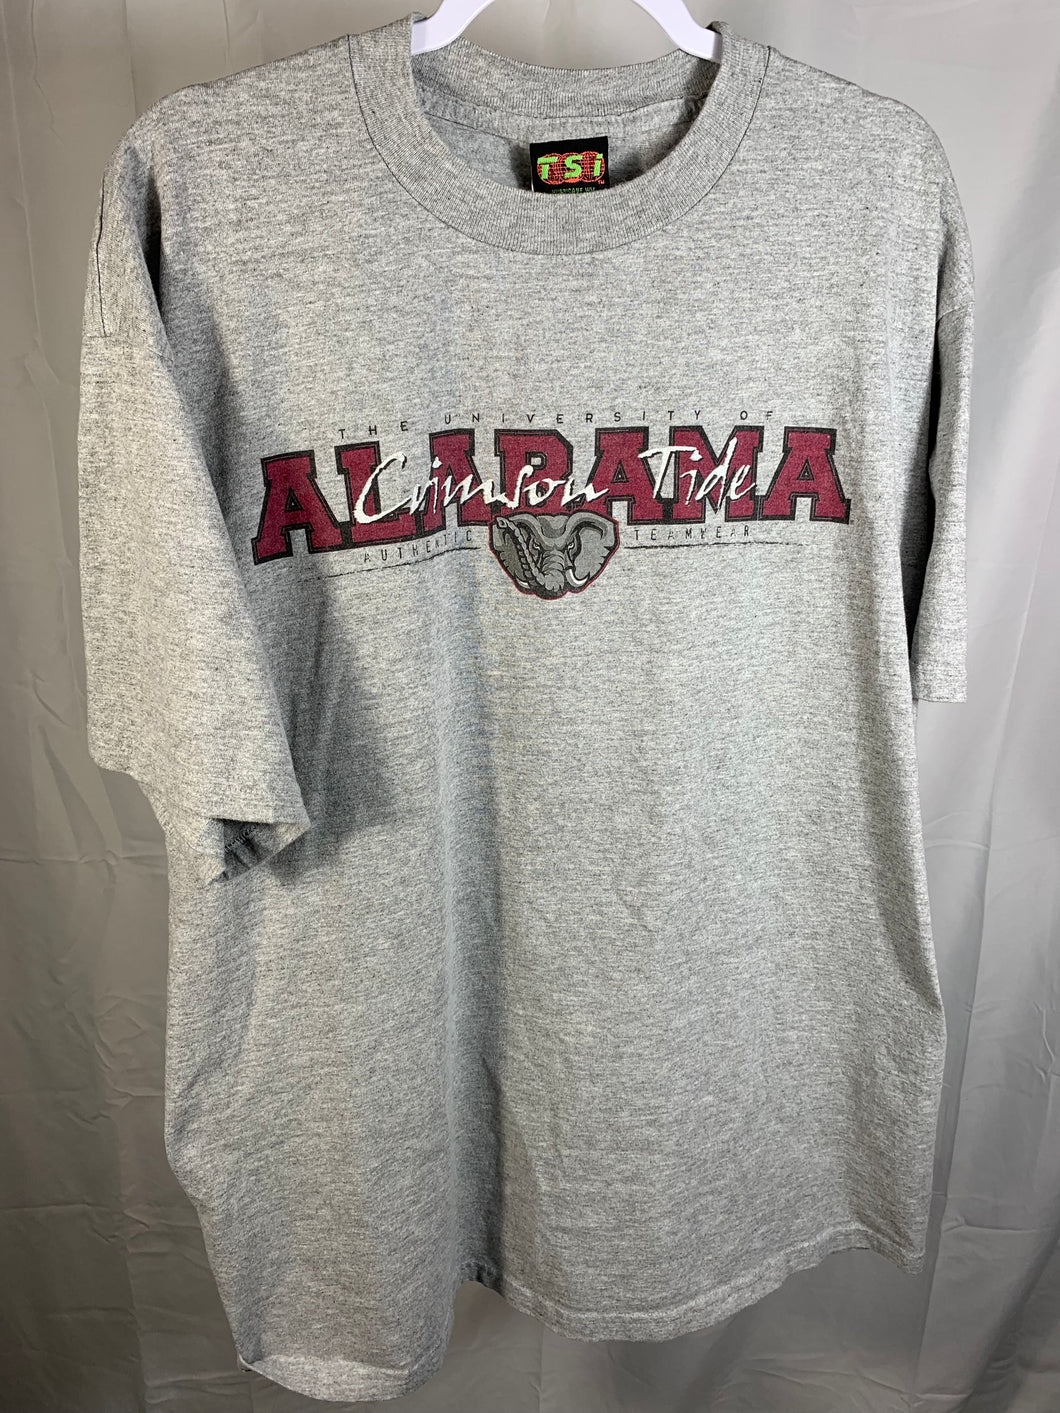 Vintage Alabama Grey T-Shirt XL